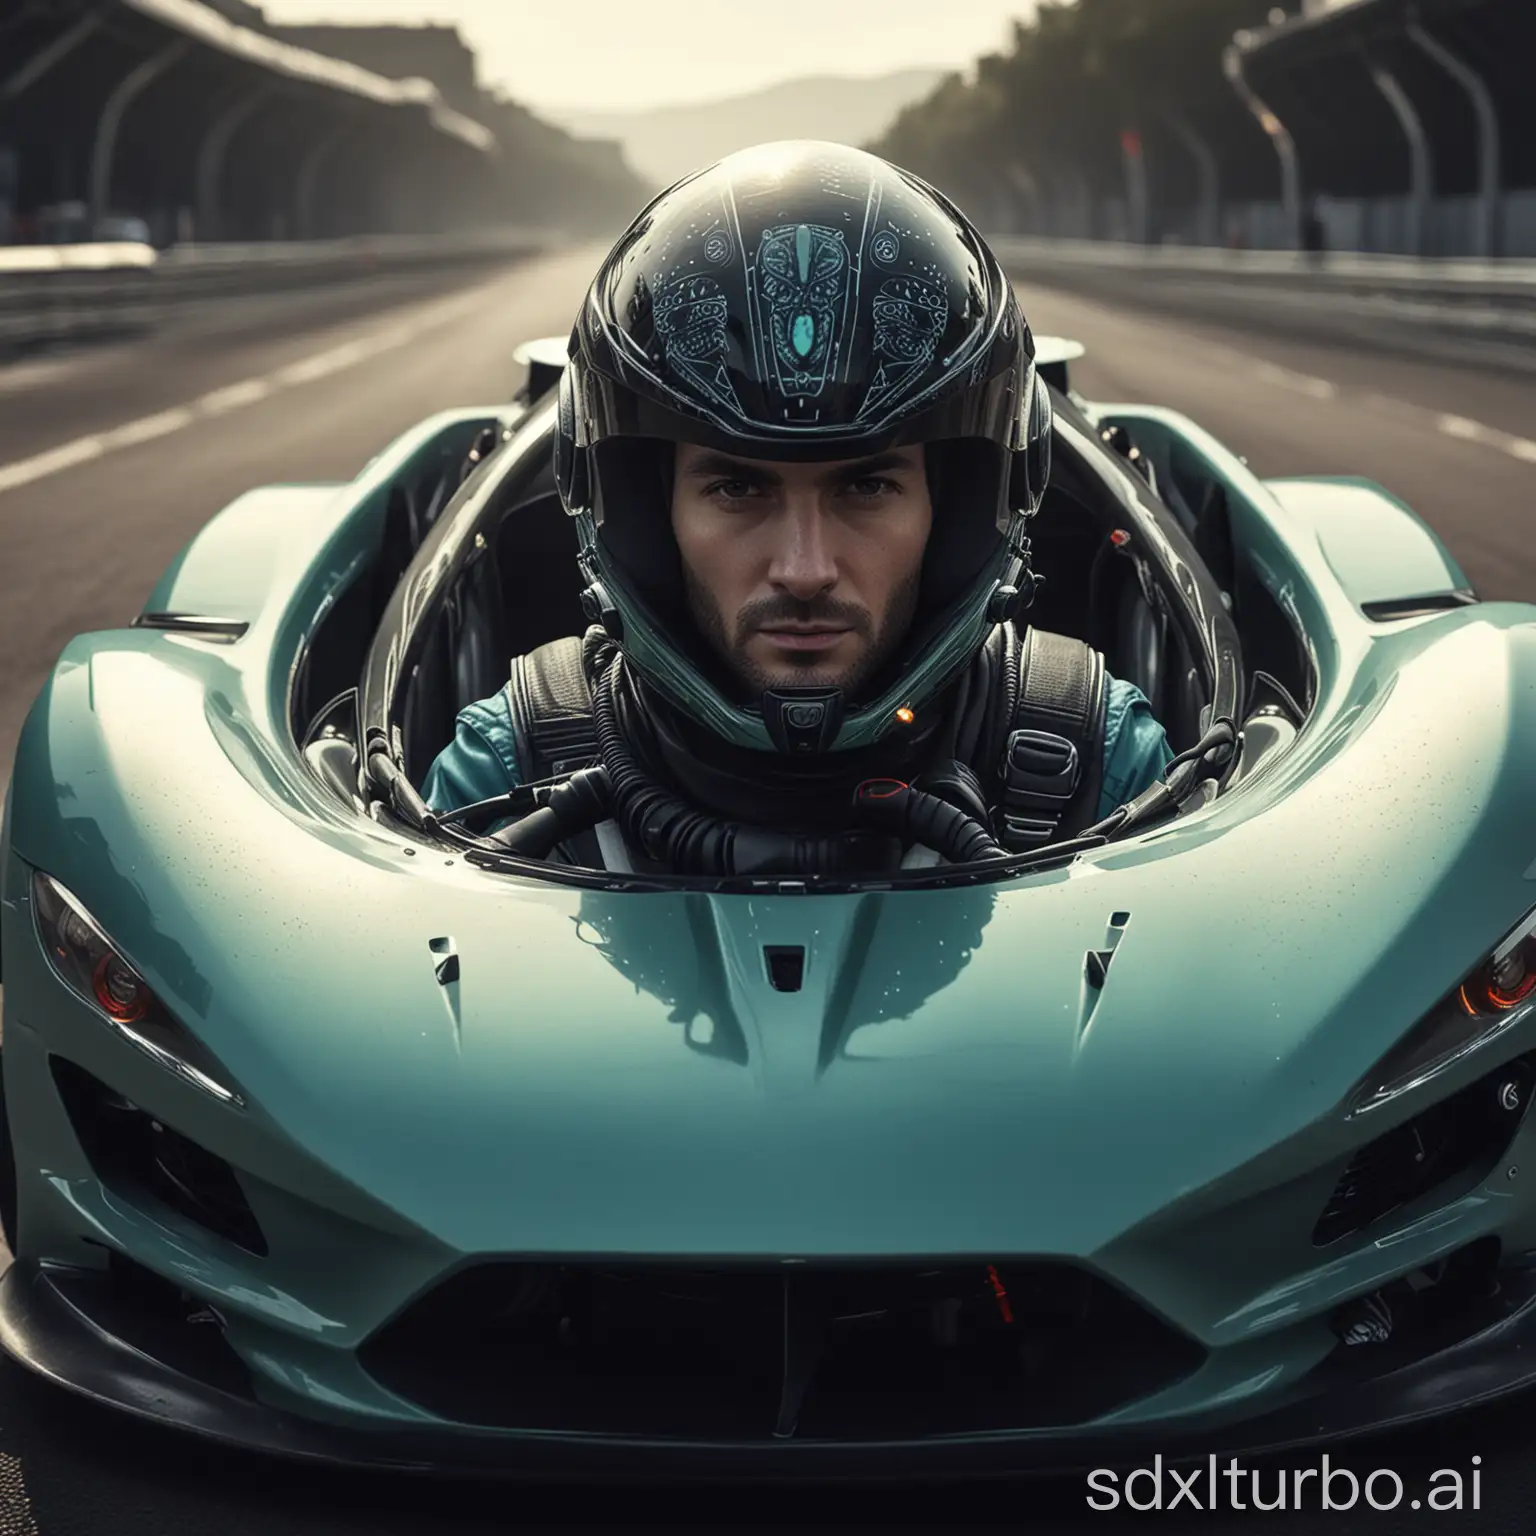 Racer with alien helmet in a futuristic GT race car